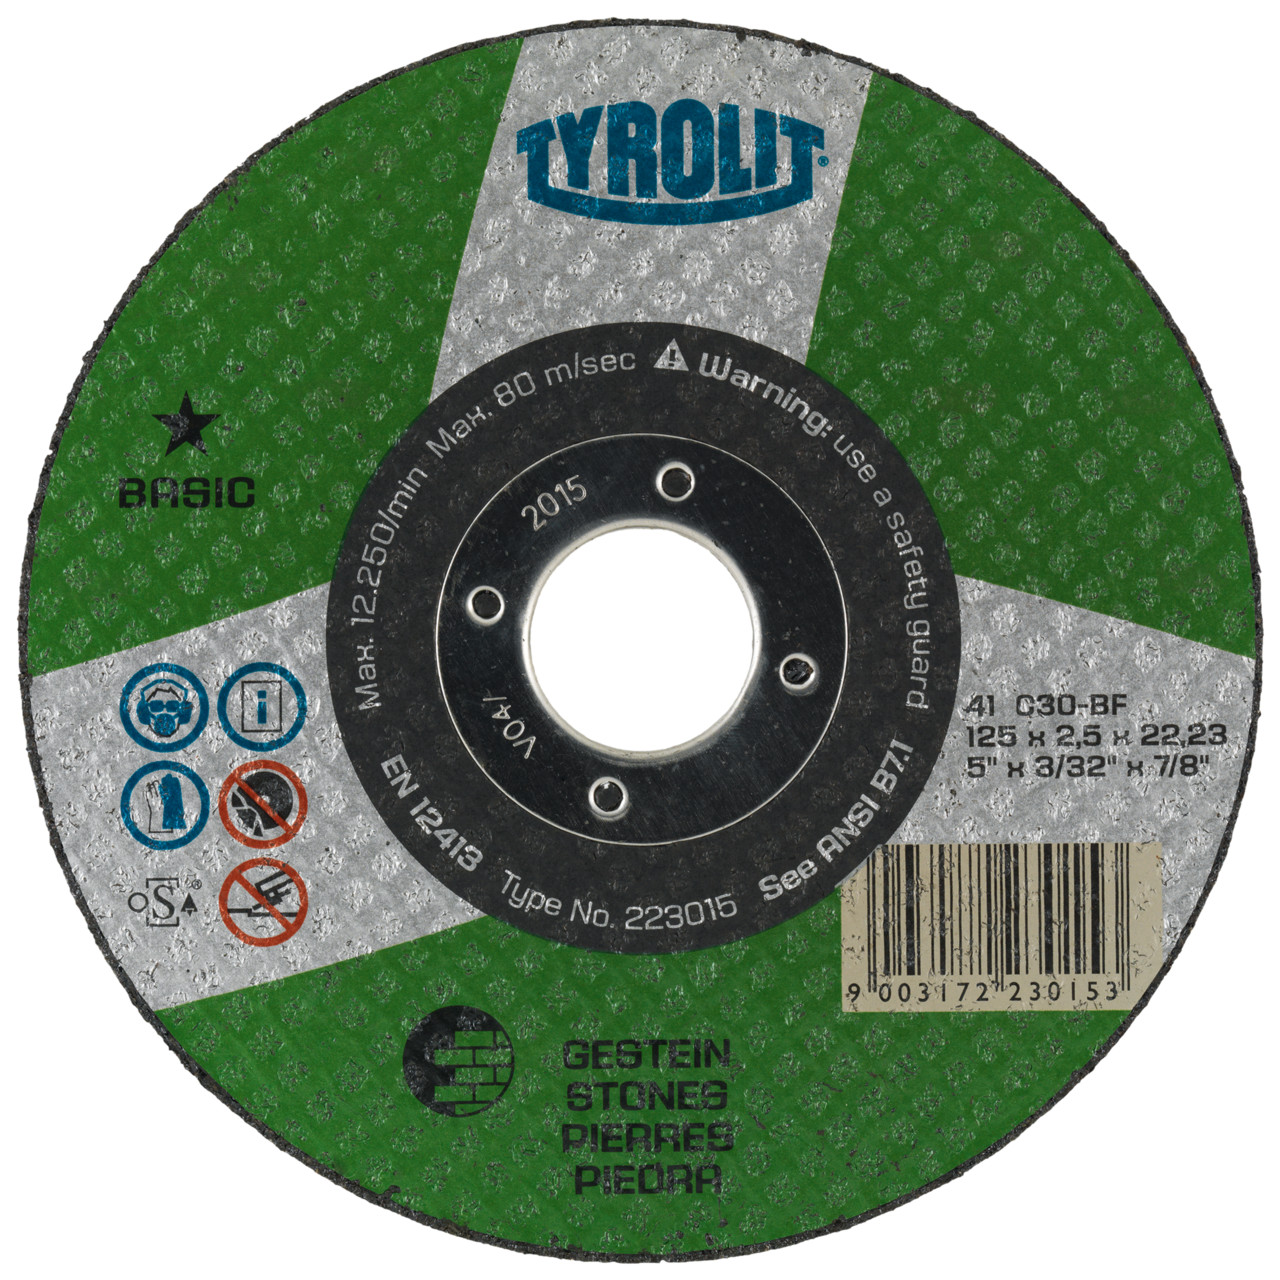 Tyrolit Cutting discs DxDxH 230x3.0x22.23 For stone, shape: 41 - straight version, Art. 223019